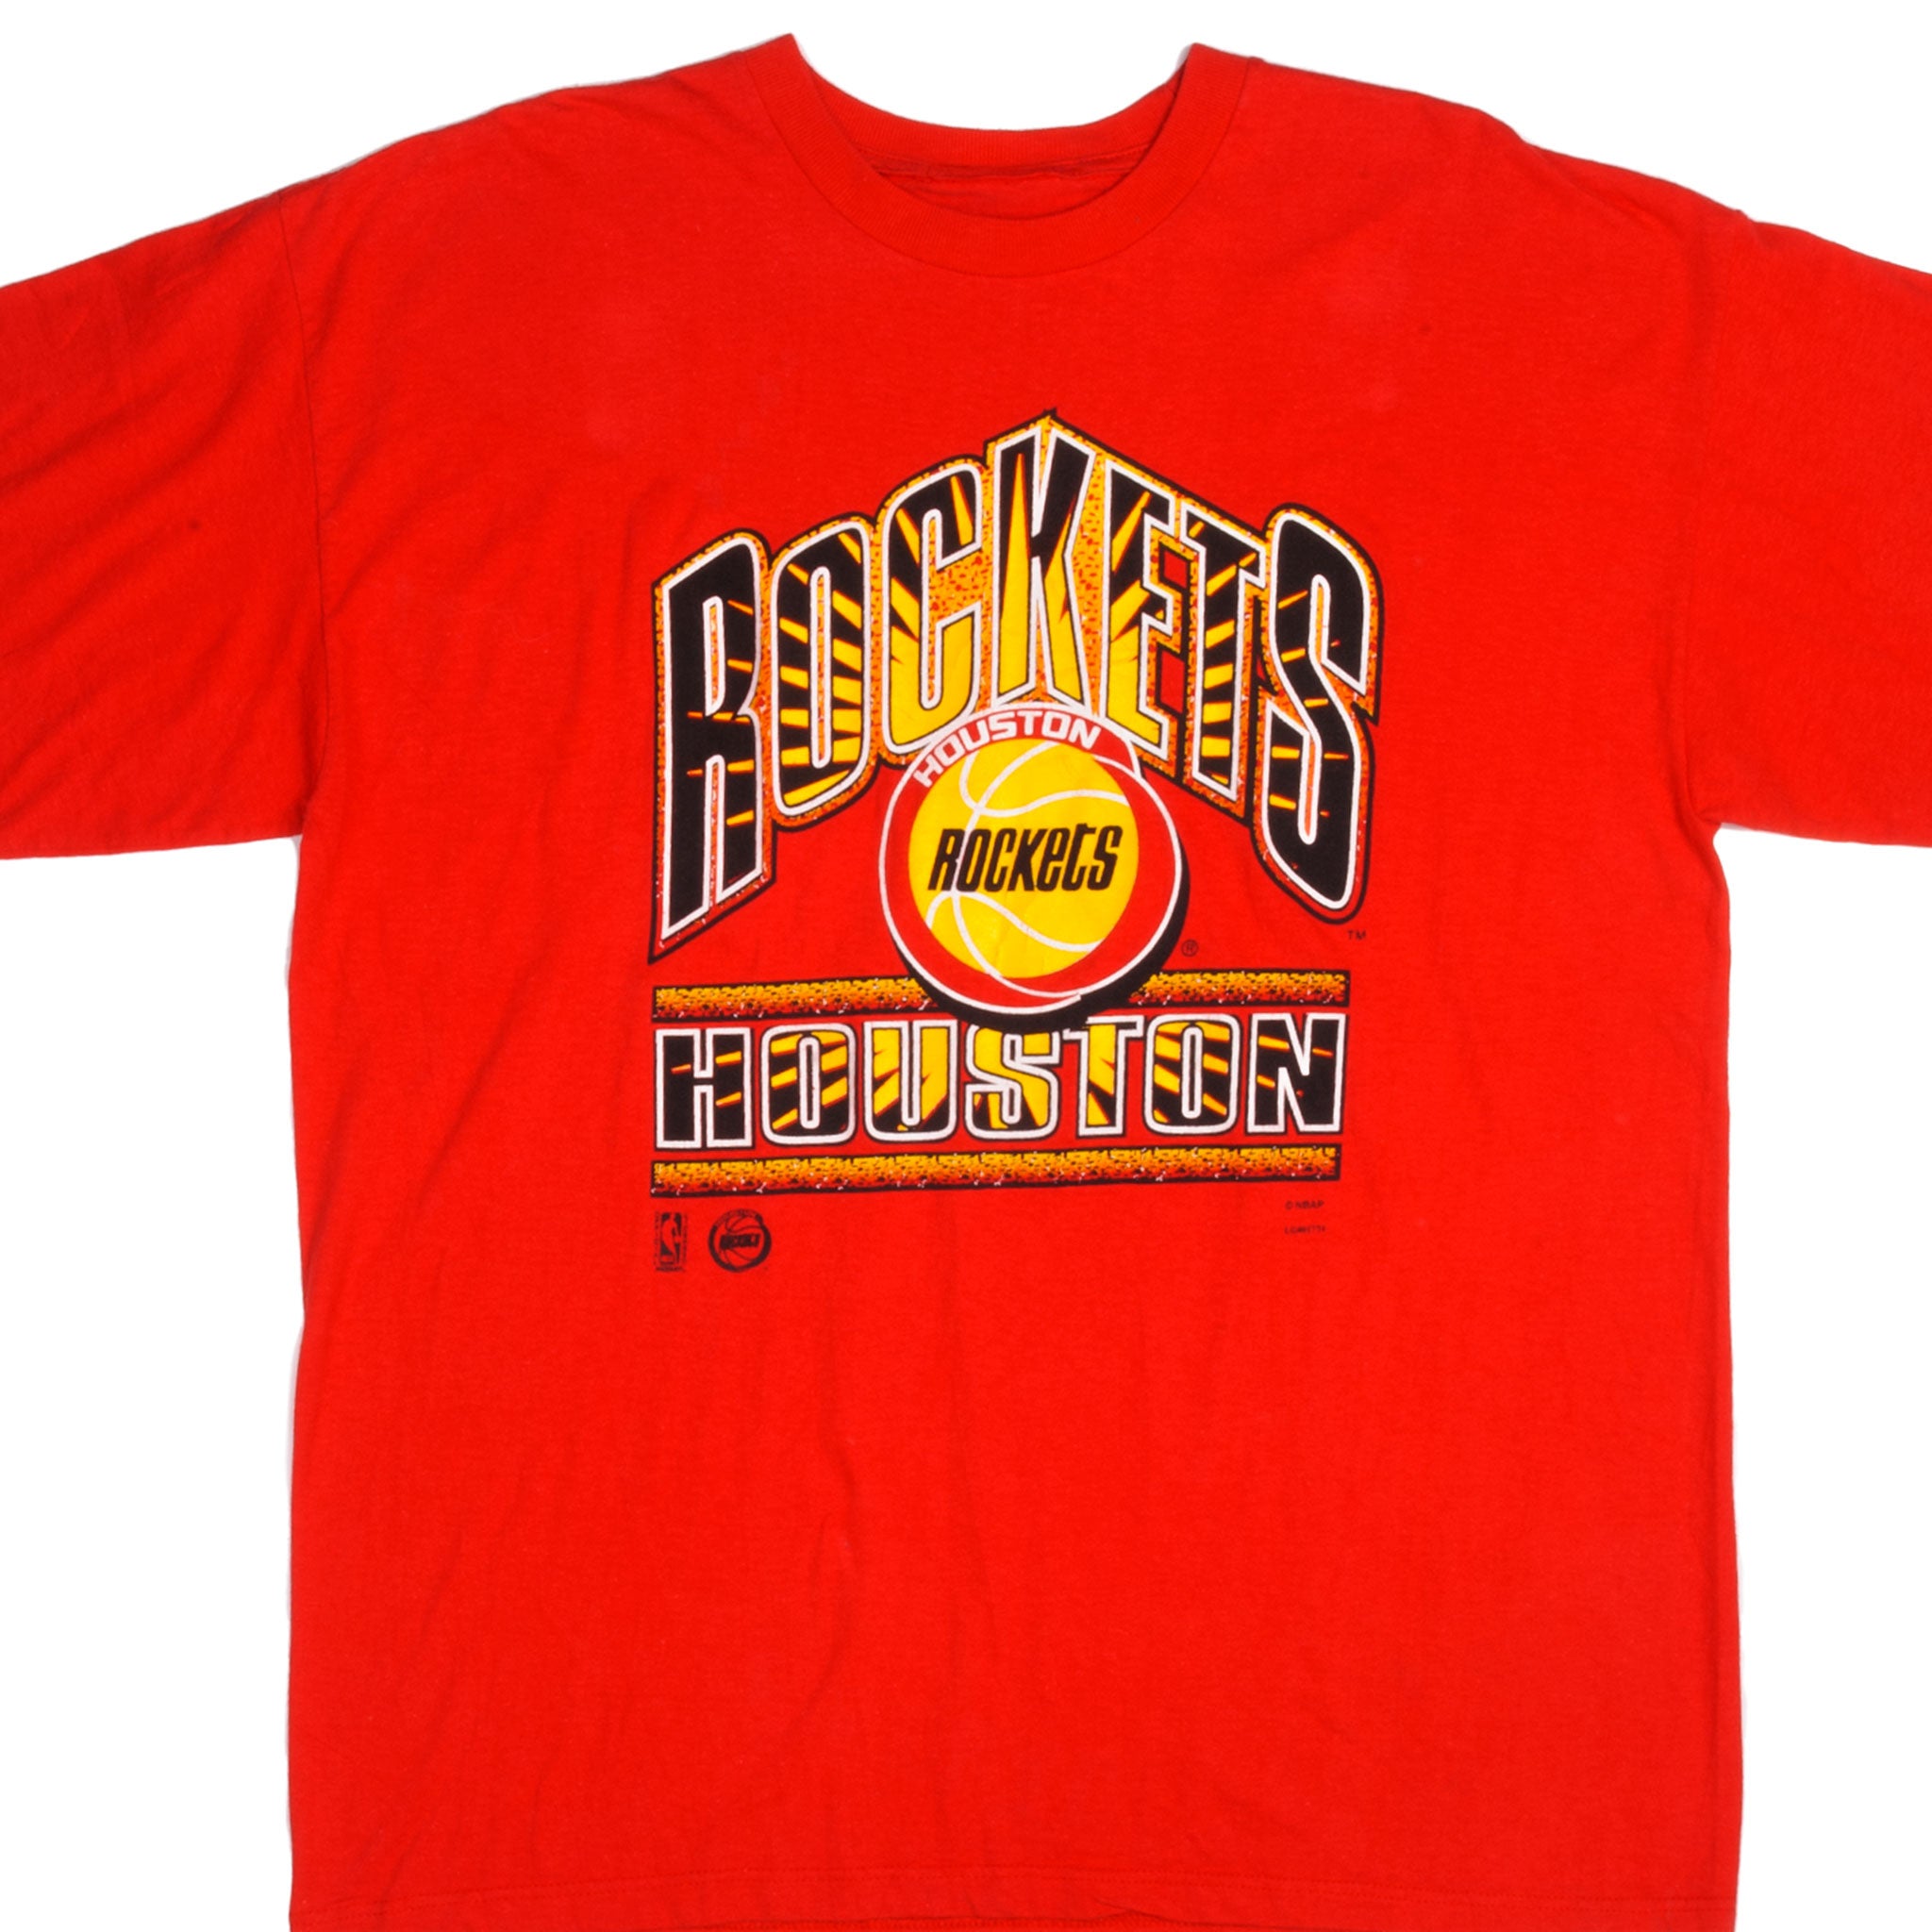 Vintage NBA Houston Rockets Tee Shirt 1980s Size Medium Made in USA